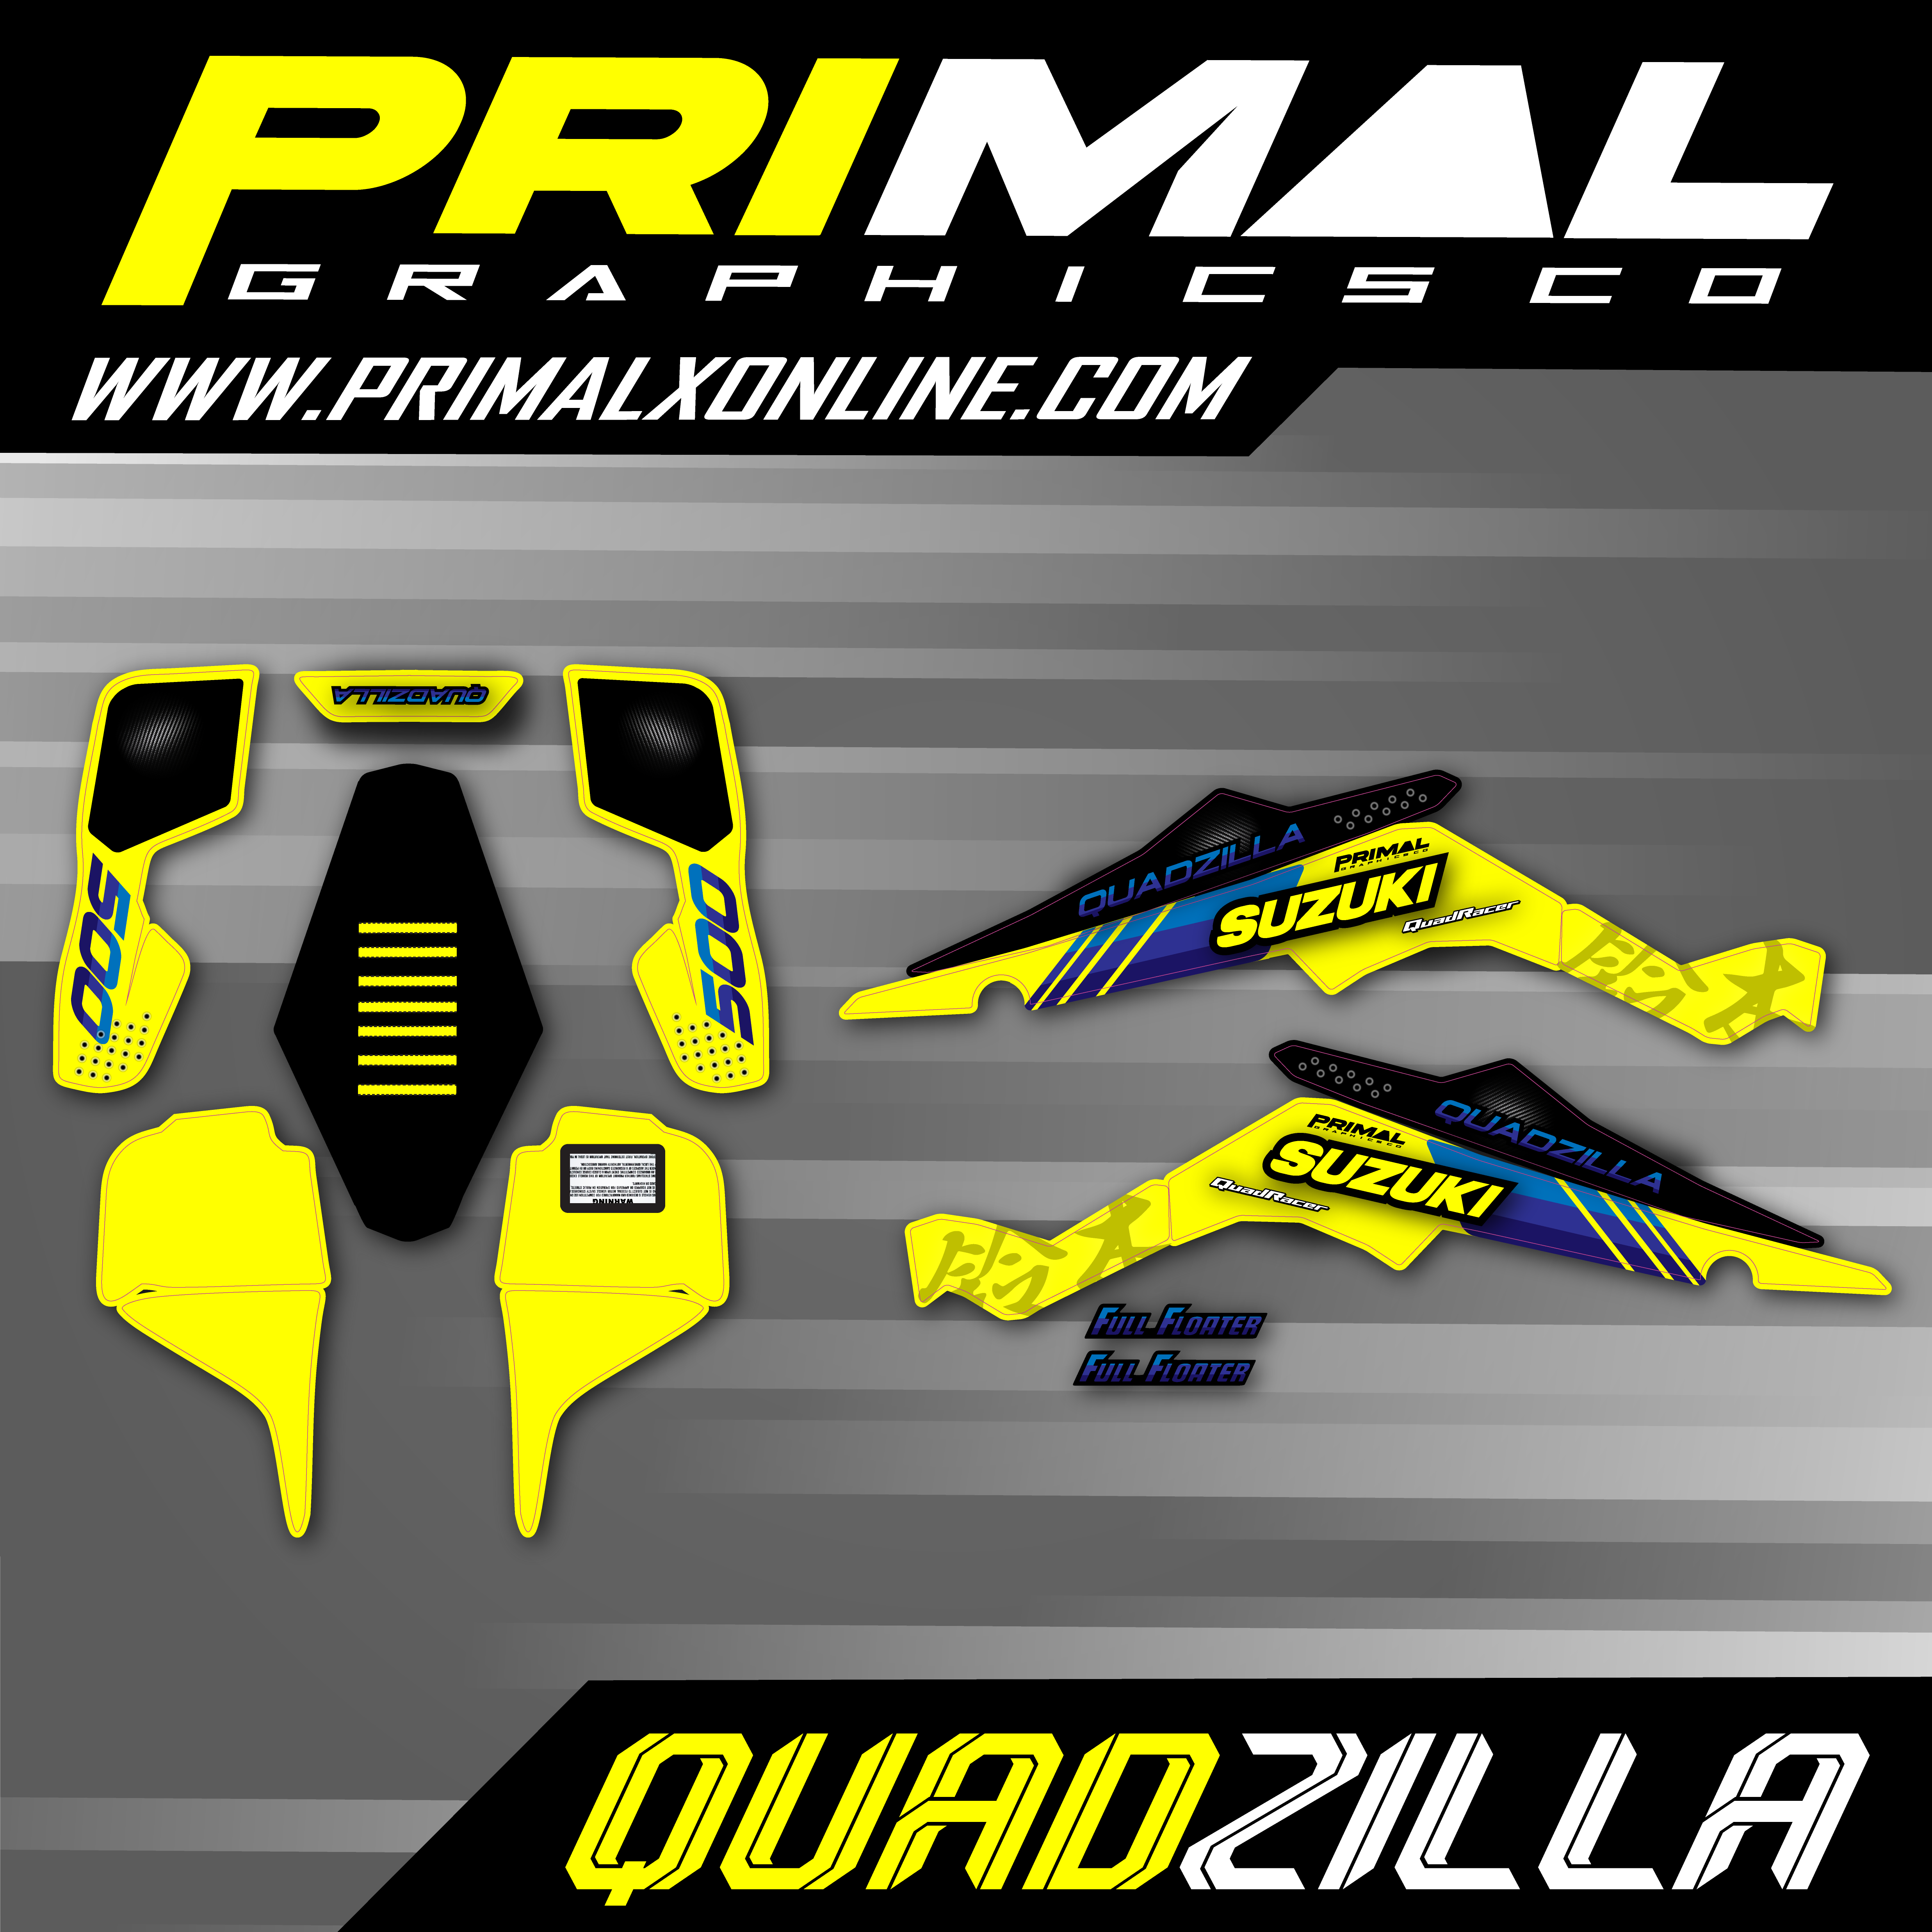 PRIMAL-GRAPHICS-CO-LT500-QUADZILLA-GRAPHICS-KIT-ATV-GRAPHICS-01